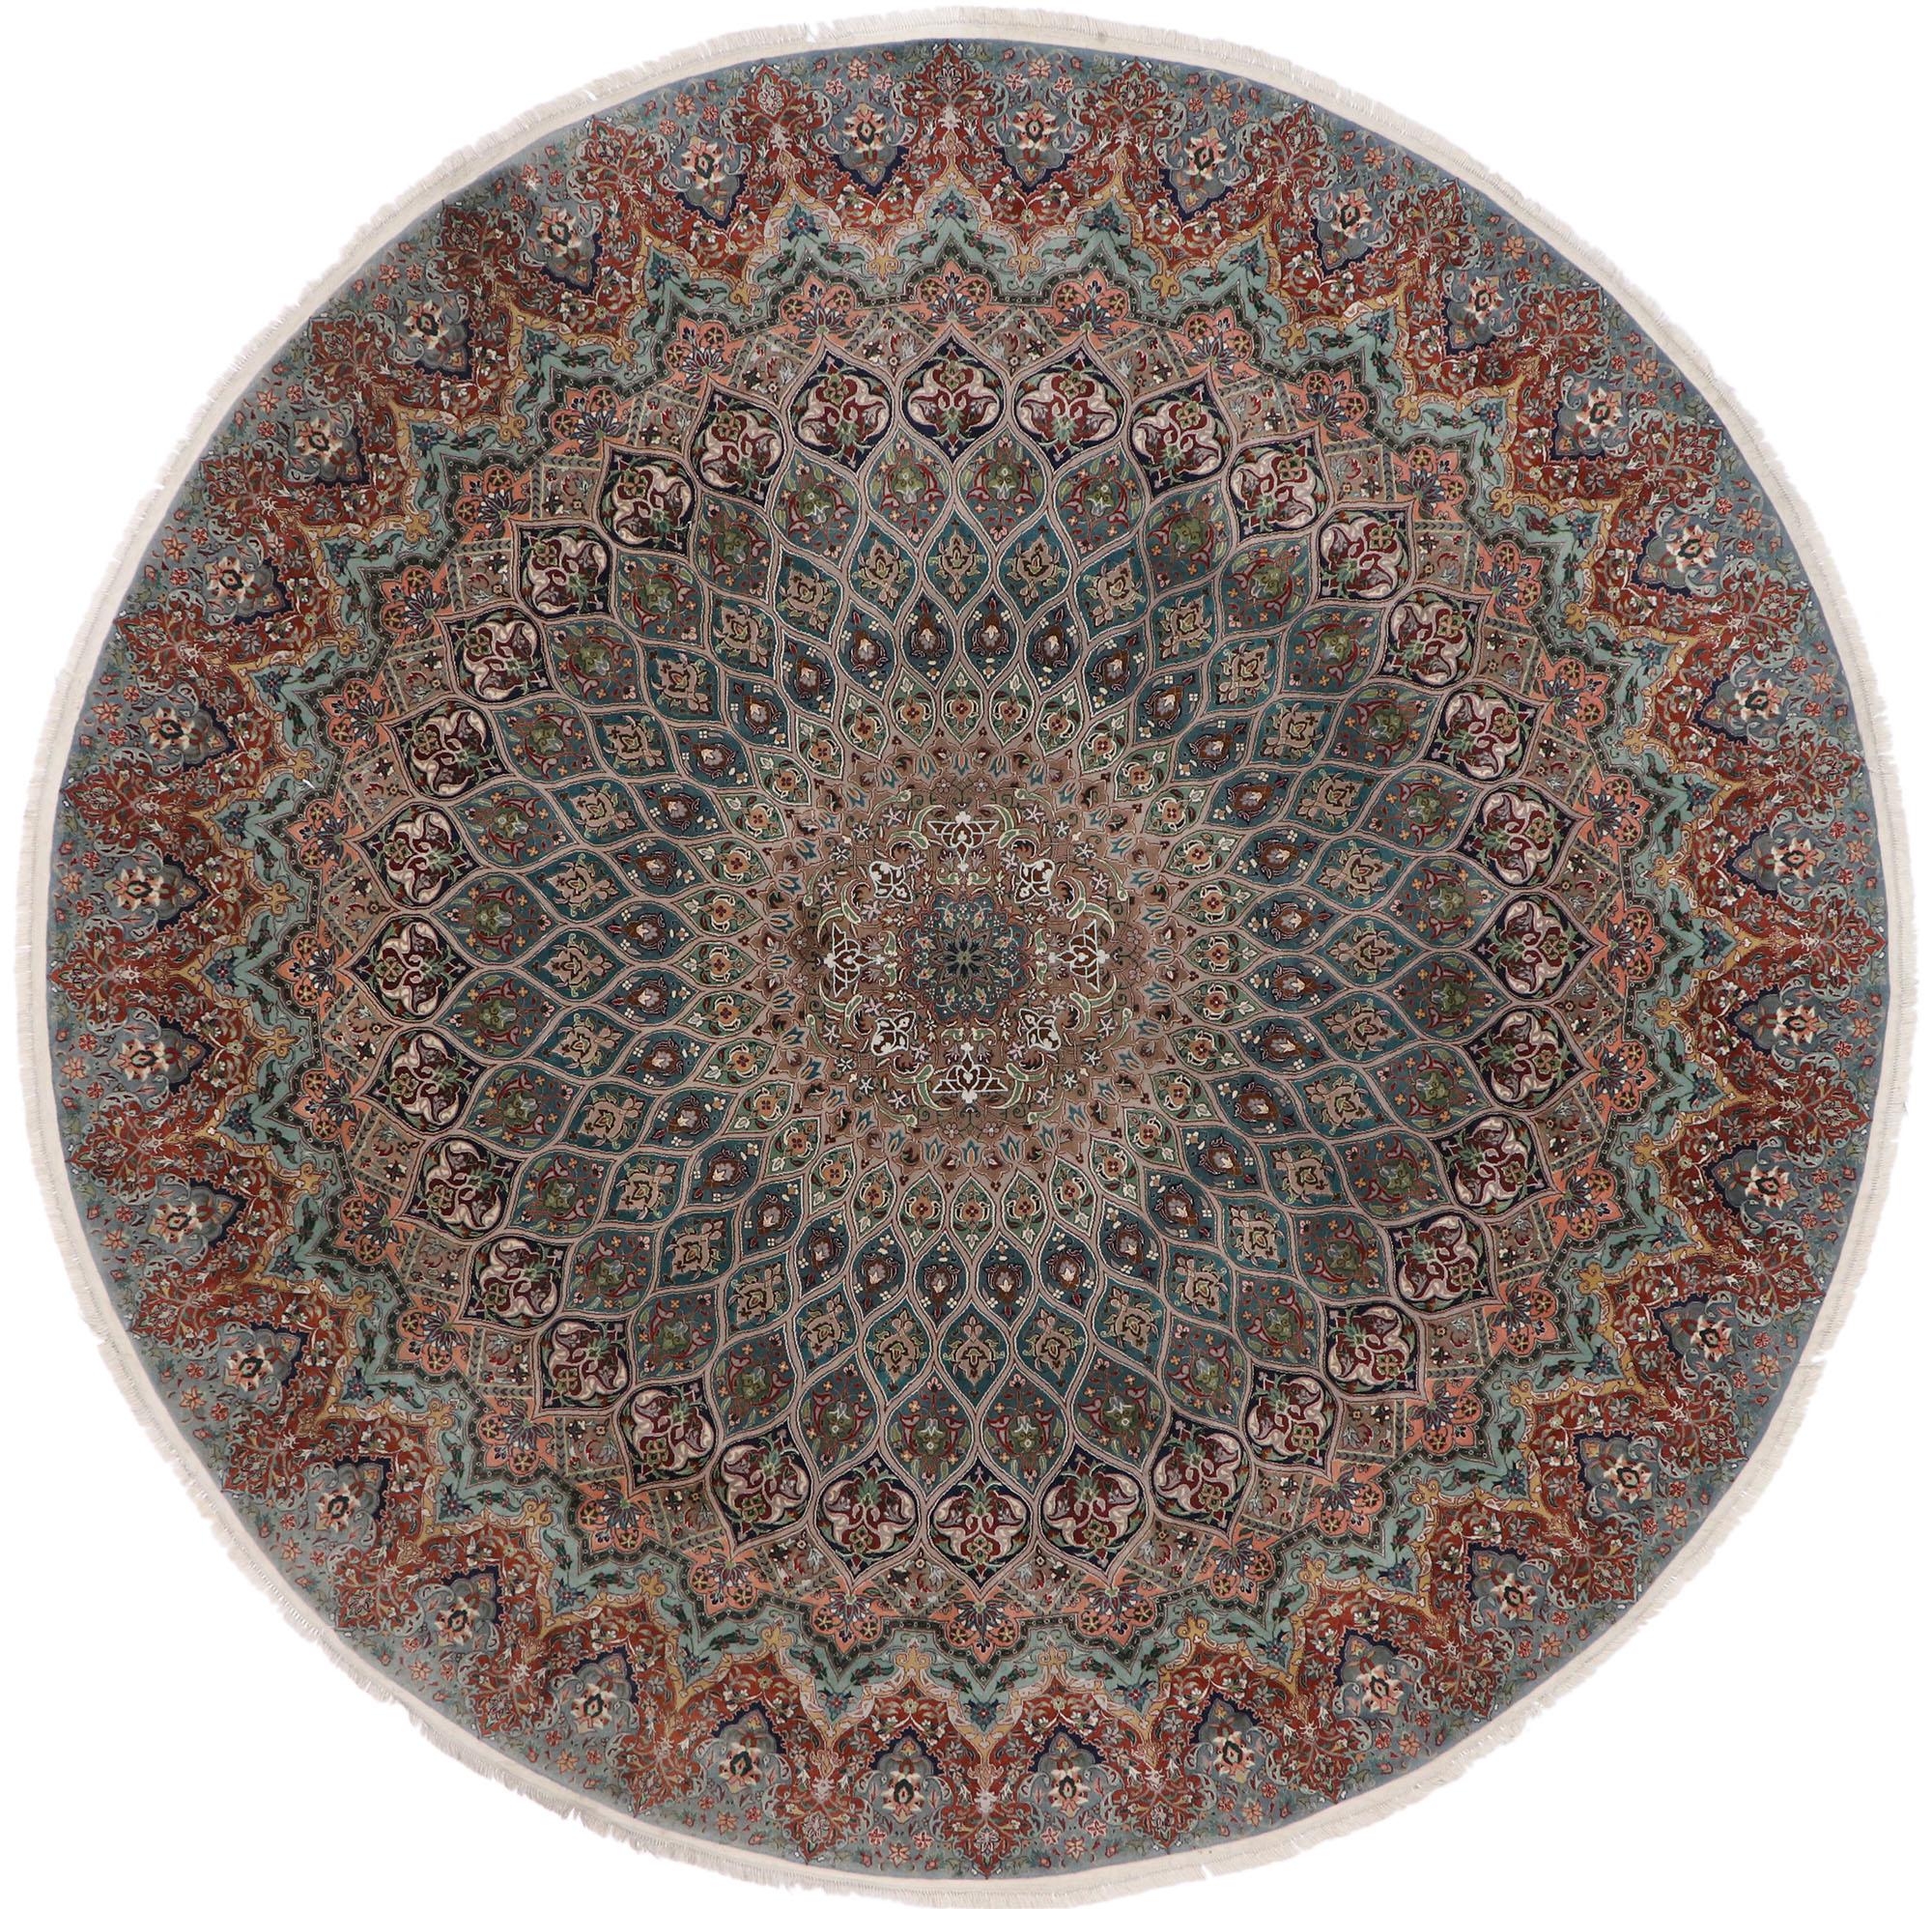 Wool Vintage Persian Tabriz Round Mandala Rug with Art Nouveau Rococo Style